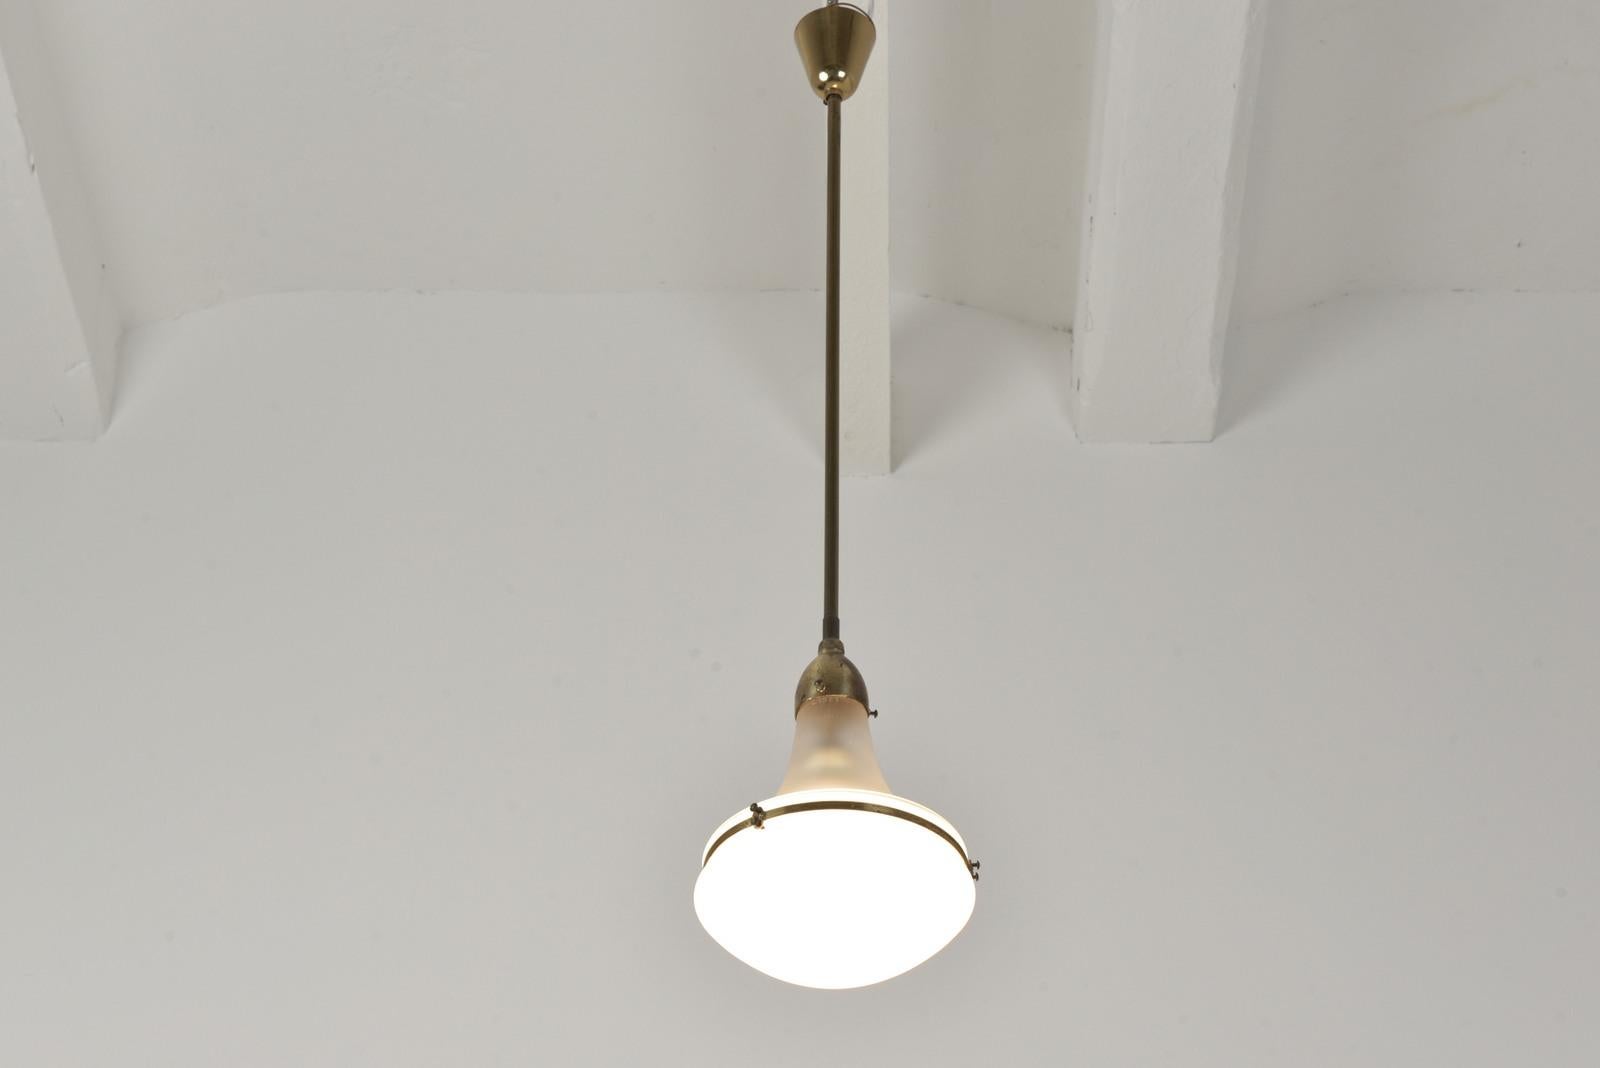 Pendant Lamp Luzette by Siemens Schuckert, Germany - 1900 In Good Condition For Sale In Berlin, DE